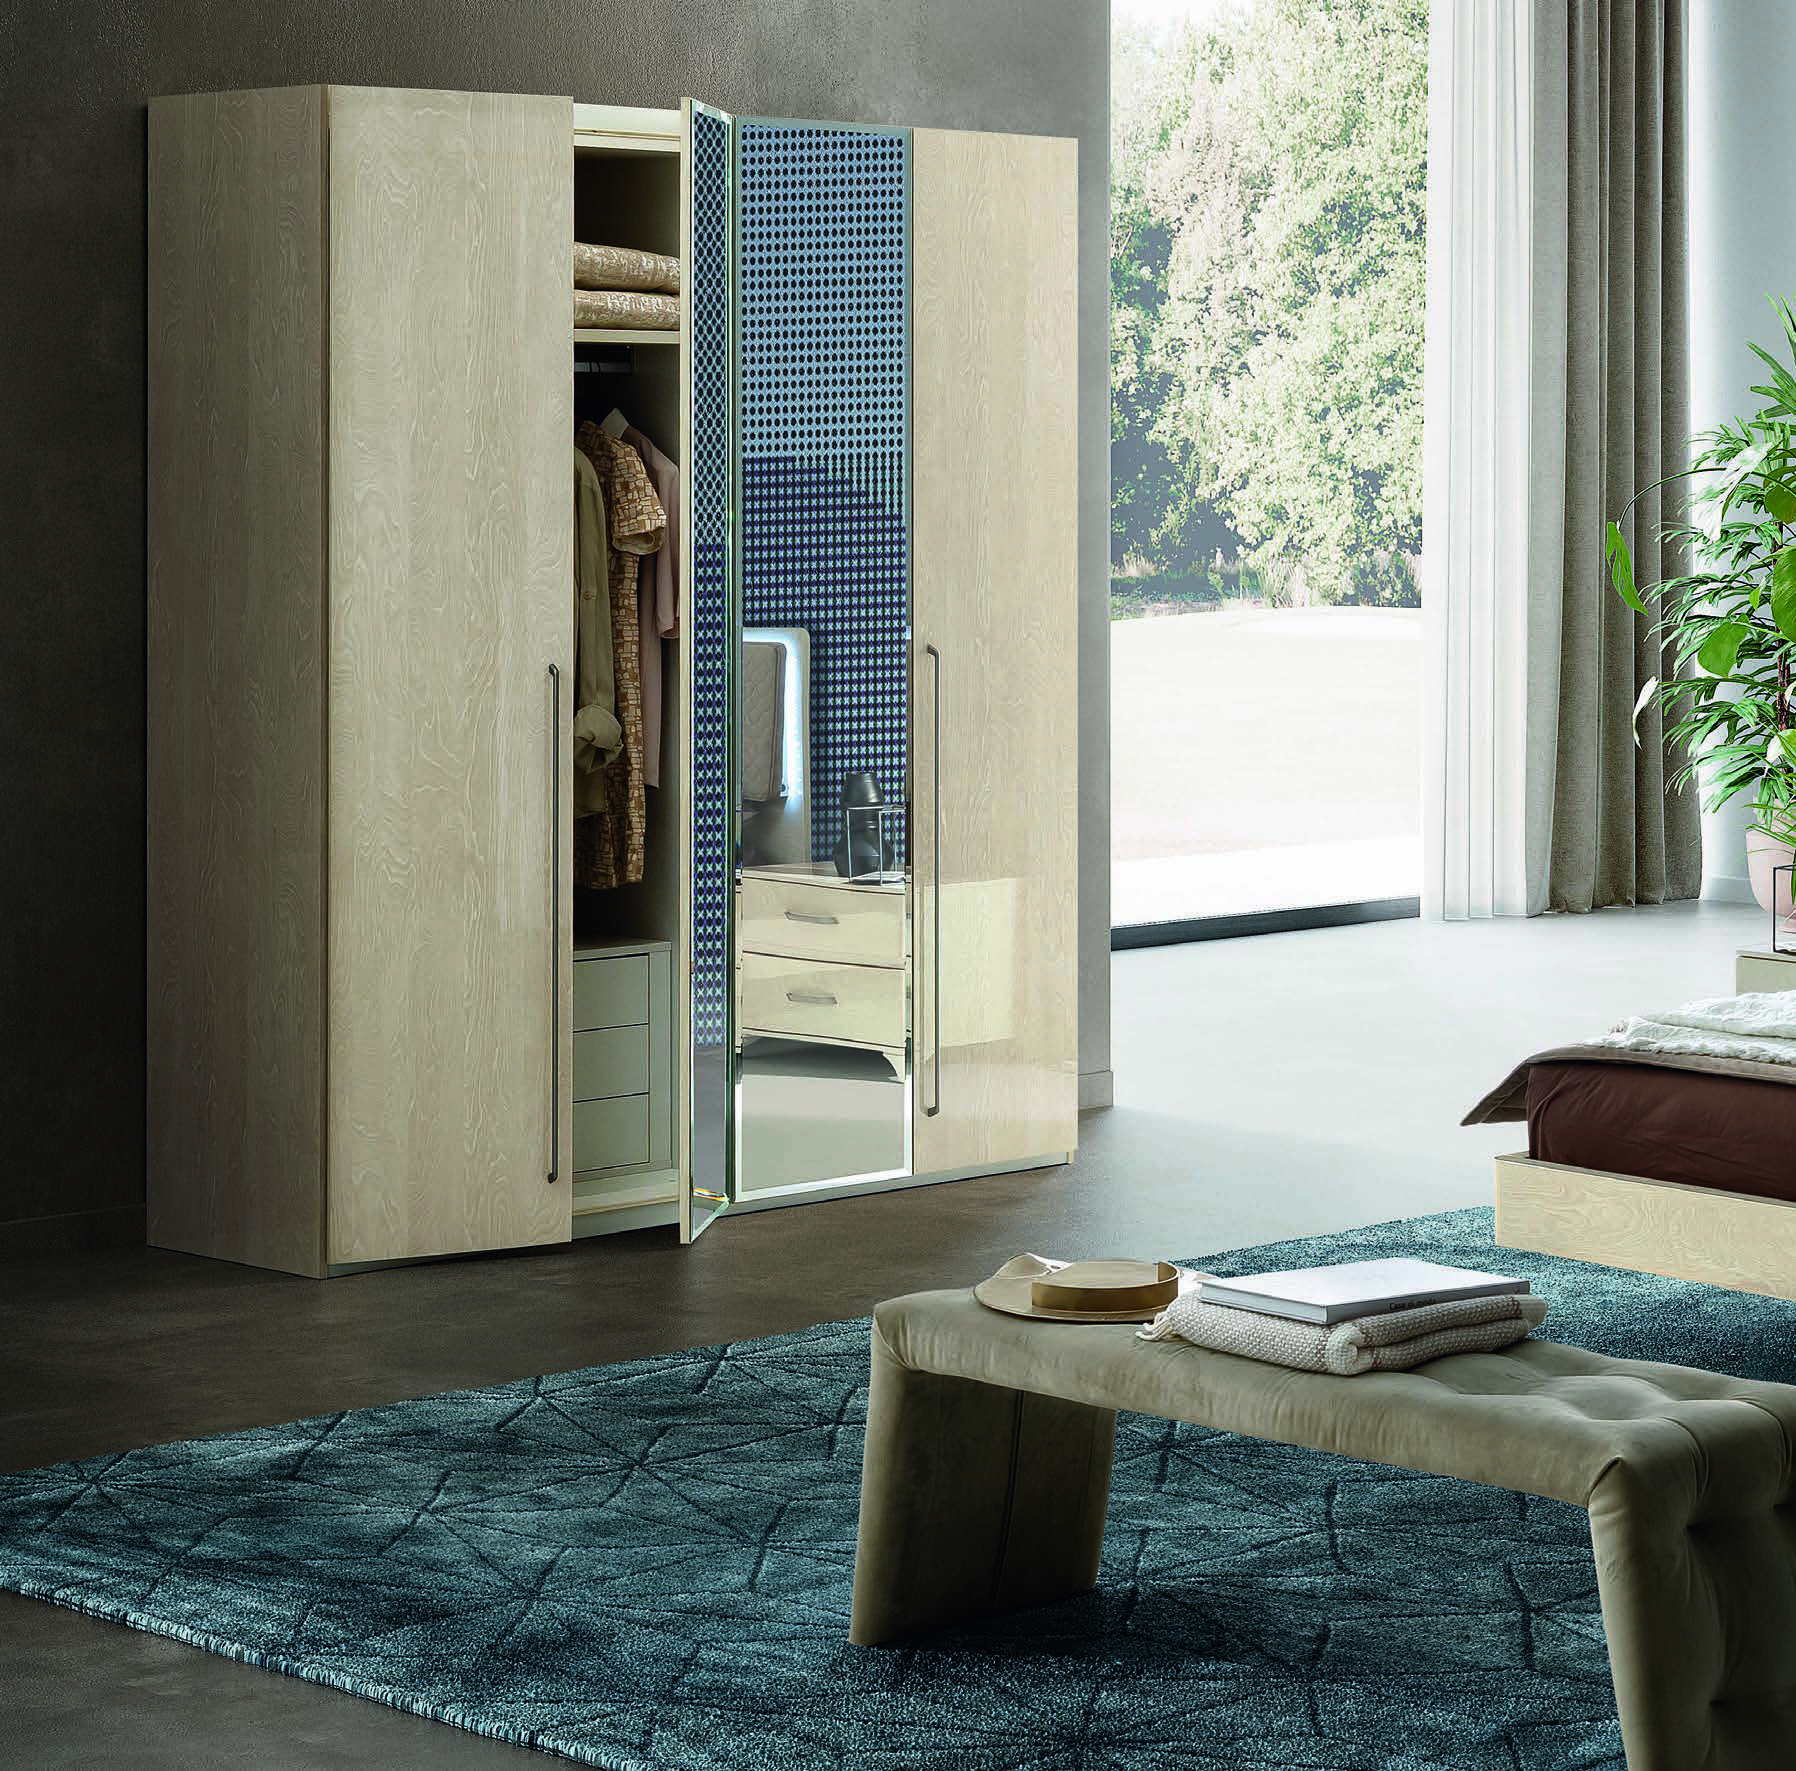 Шкаф платяной Ambra, 4-х дверный, с зеркалами, цвет: янтарная береза, 186x61x228 см (148AR4.04AV)148AR4.04AV